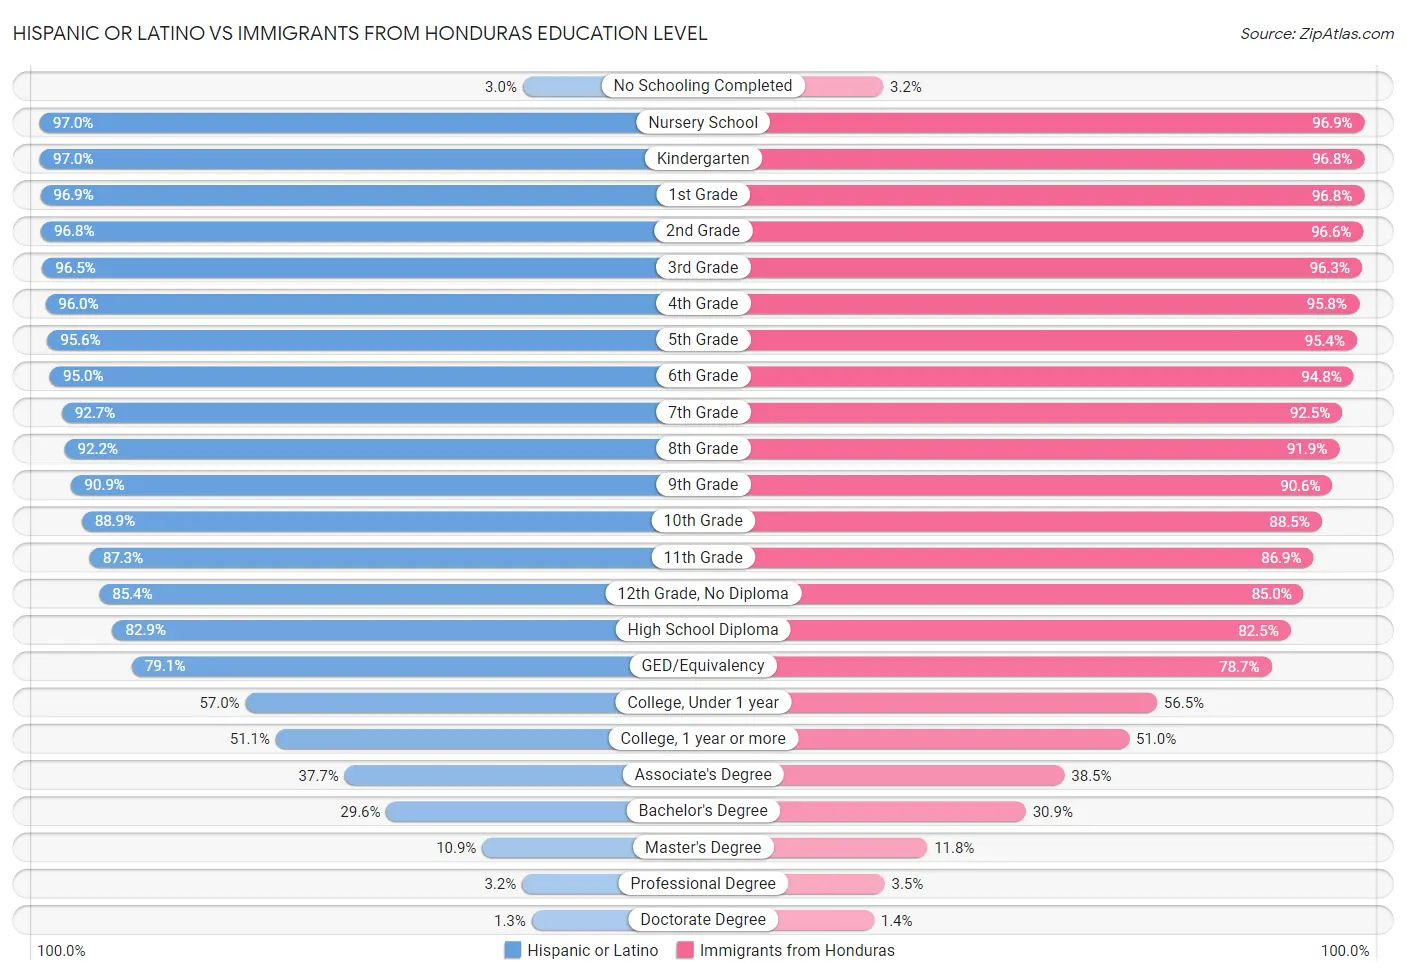 Hispanic or Latino vs Immigrants from Honduras Education Level